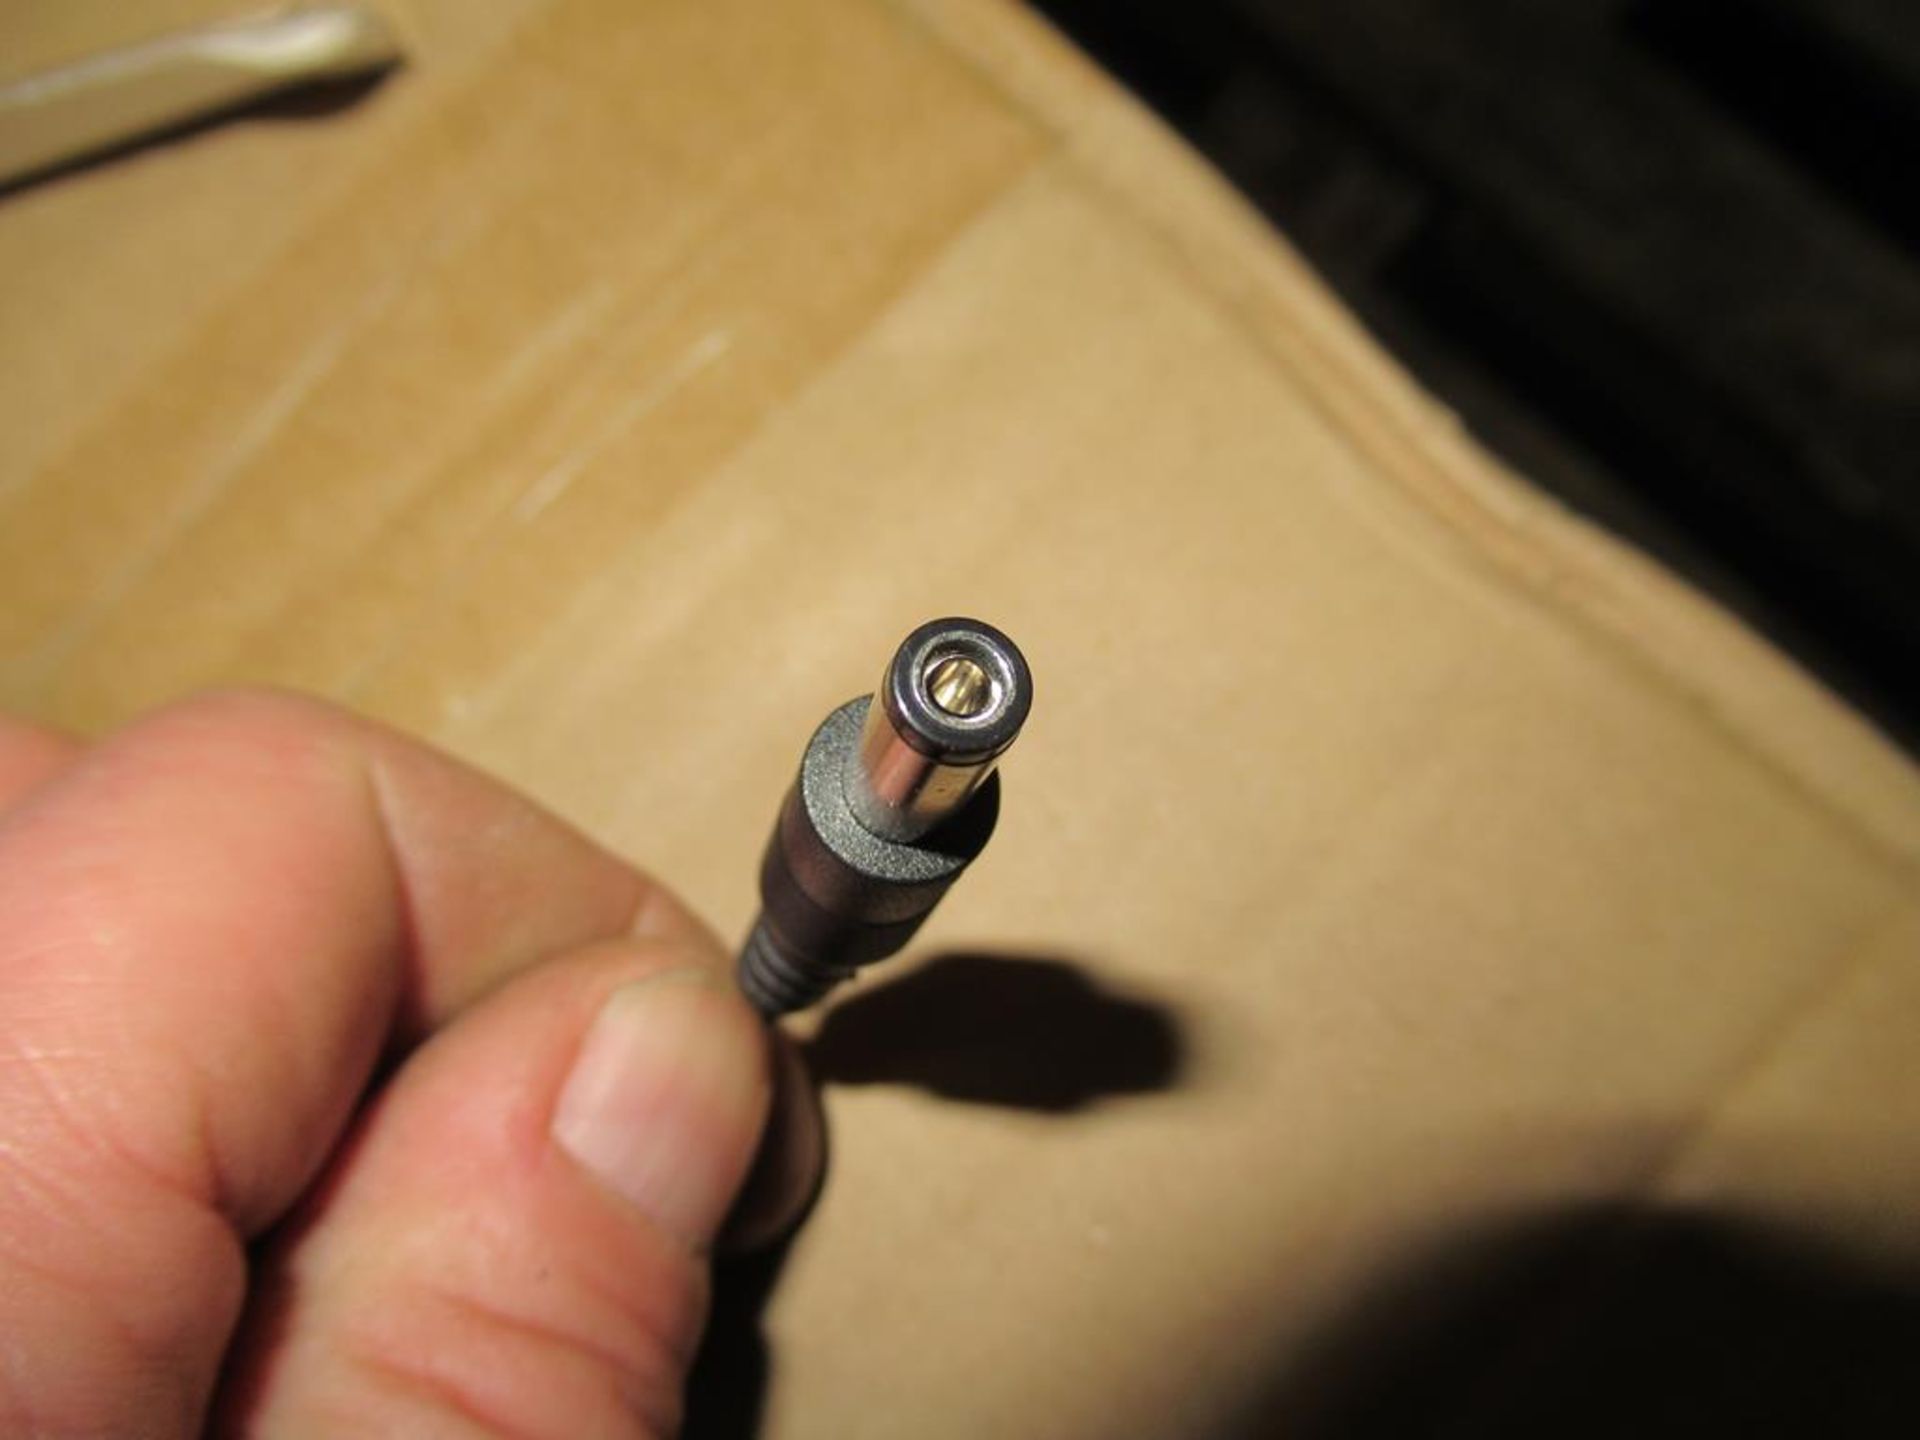 81x Australian Plug In Linear Mains Adaptor 15V DC 500mA 2.1x5.5.5mm DC Powerplug. - Image 4 of 4